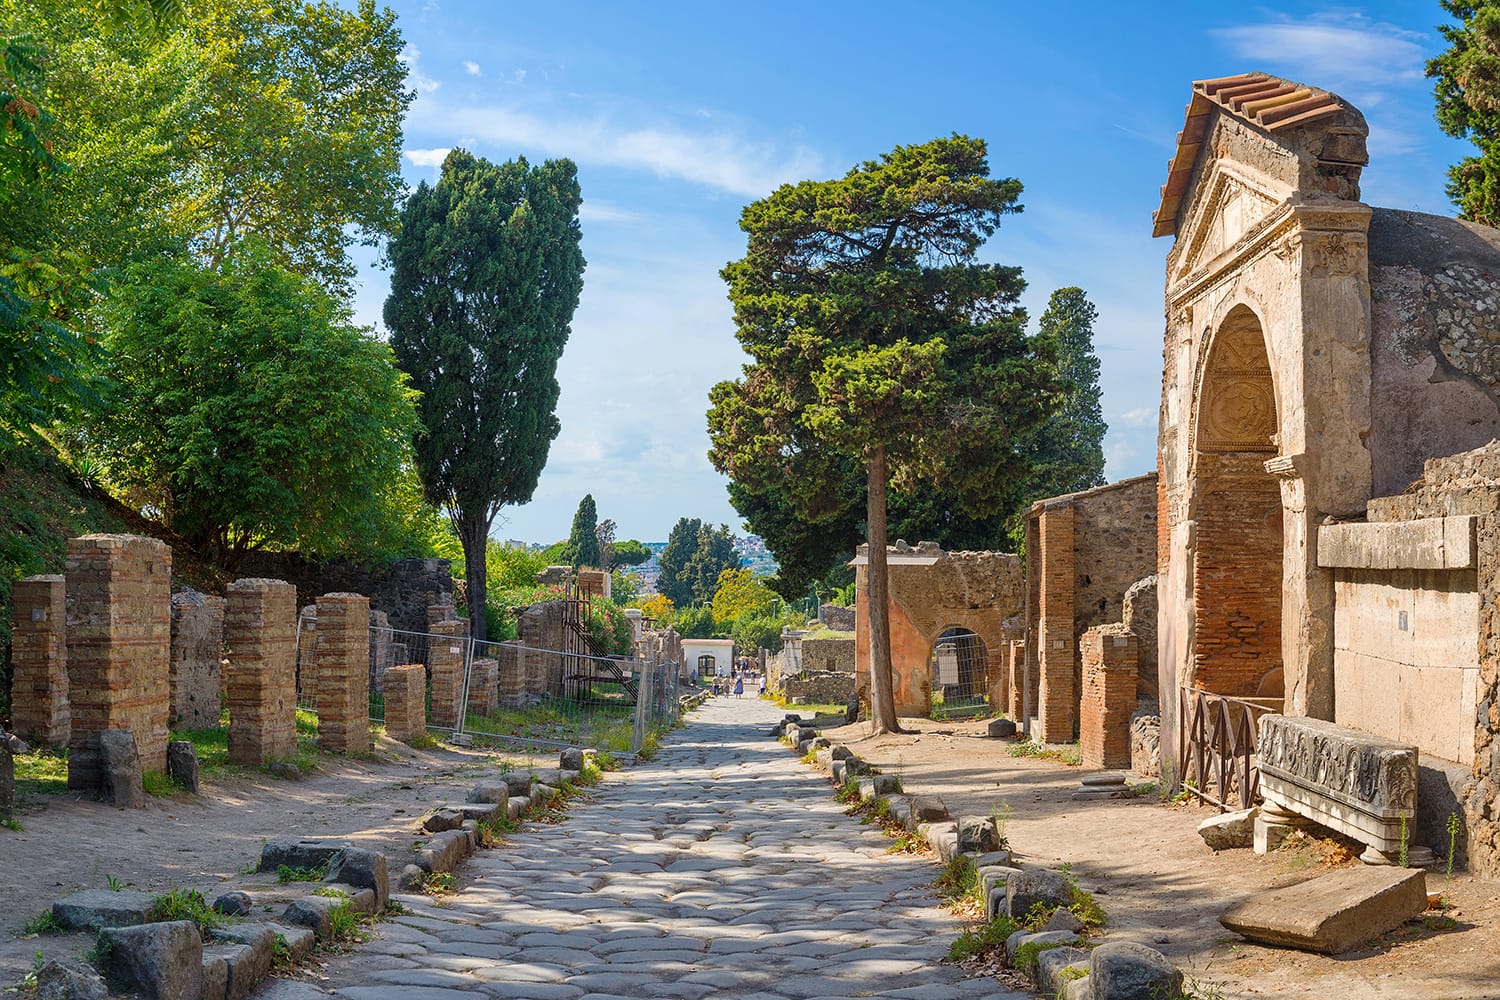 Stone street inside ruin of Pompeii roman city, Italy